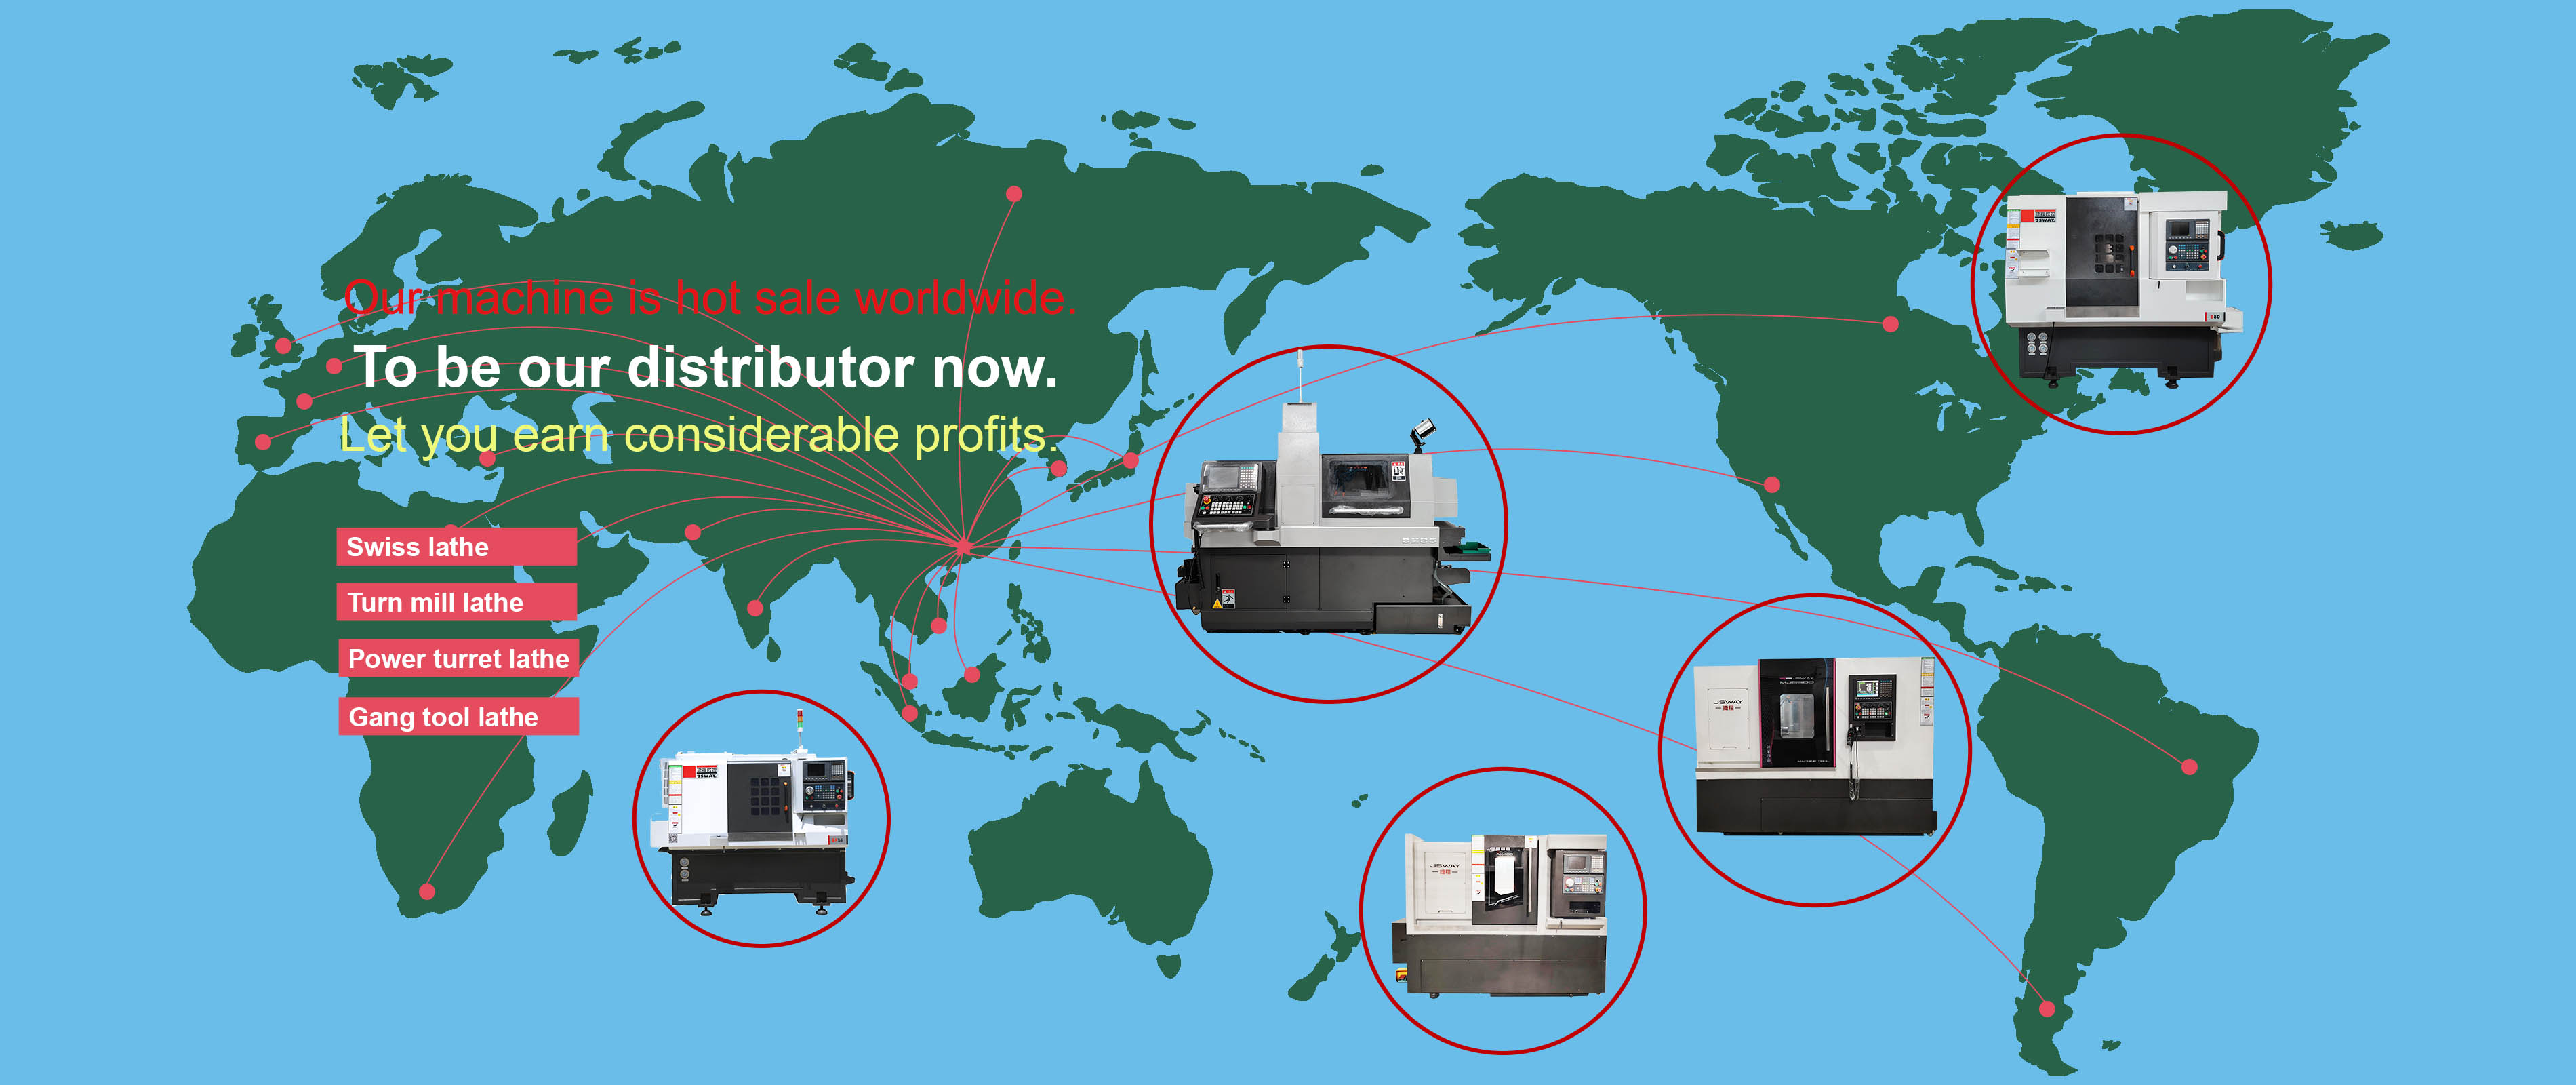 JSWAY CNC Machine in hot sale worldwide